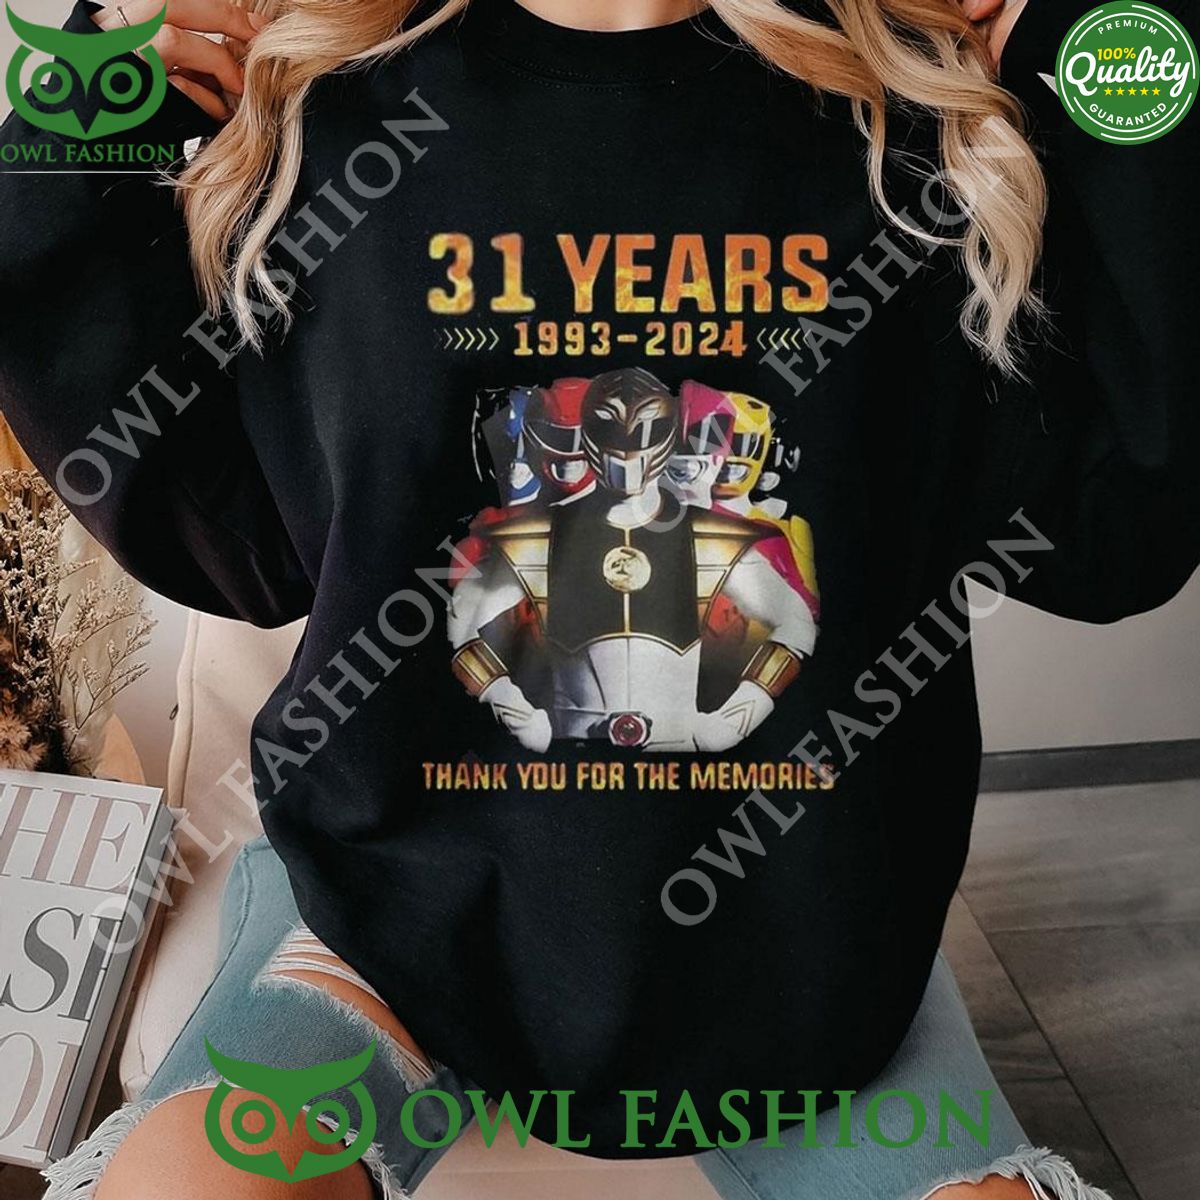 31 Years 1993-2024 Power Rangers Memories Hoodie Shirt